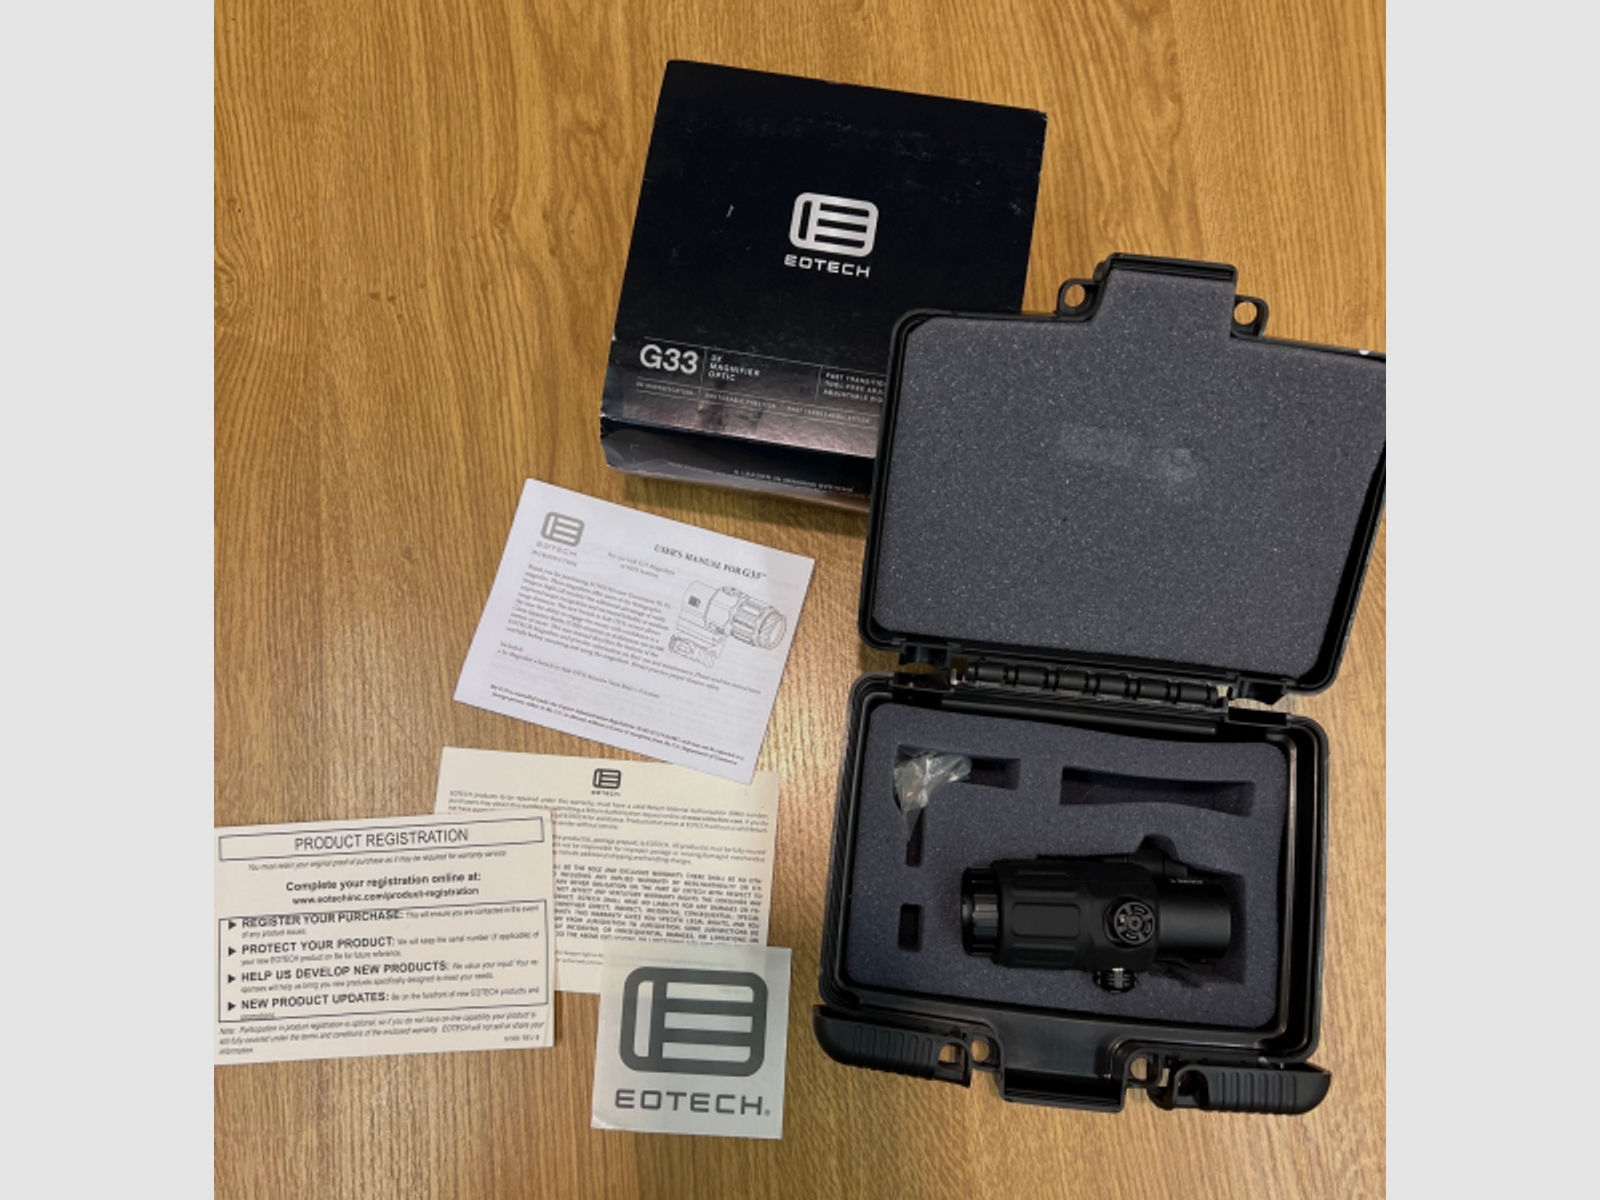 EOTECH G33 3x Magnifier optic